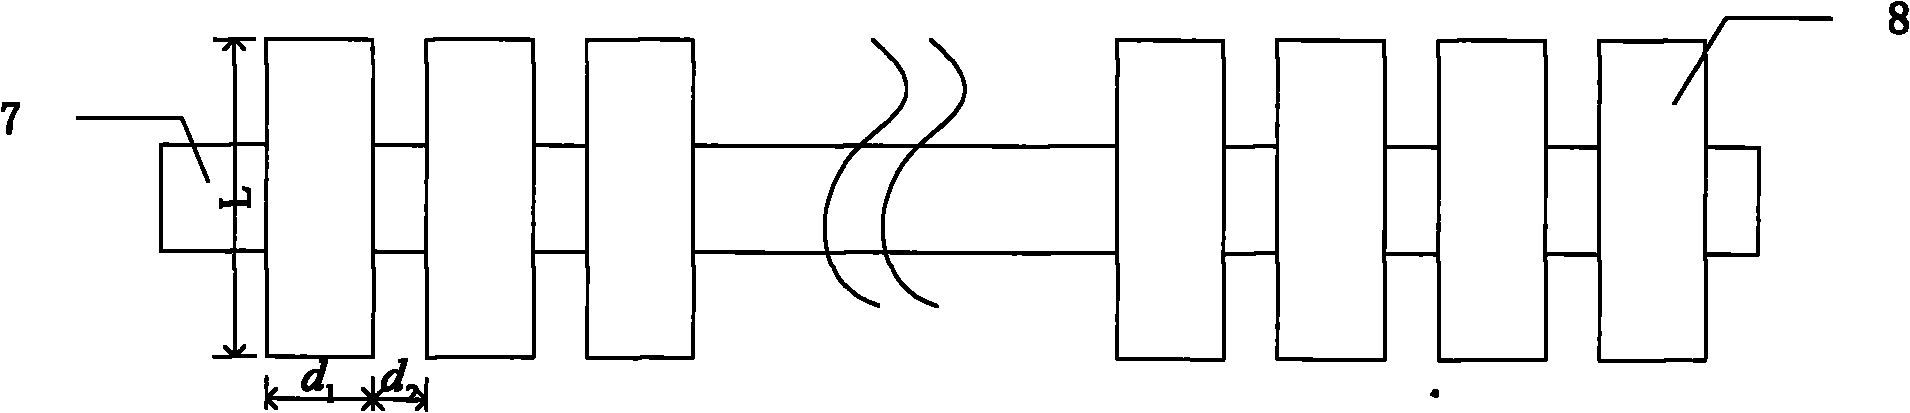 Method for controlling signal transmission synchronization